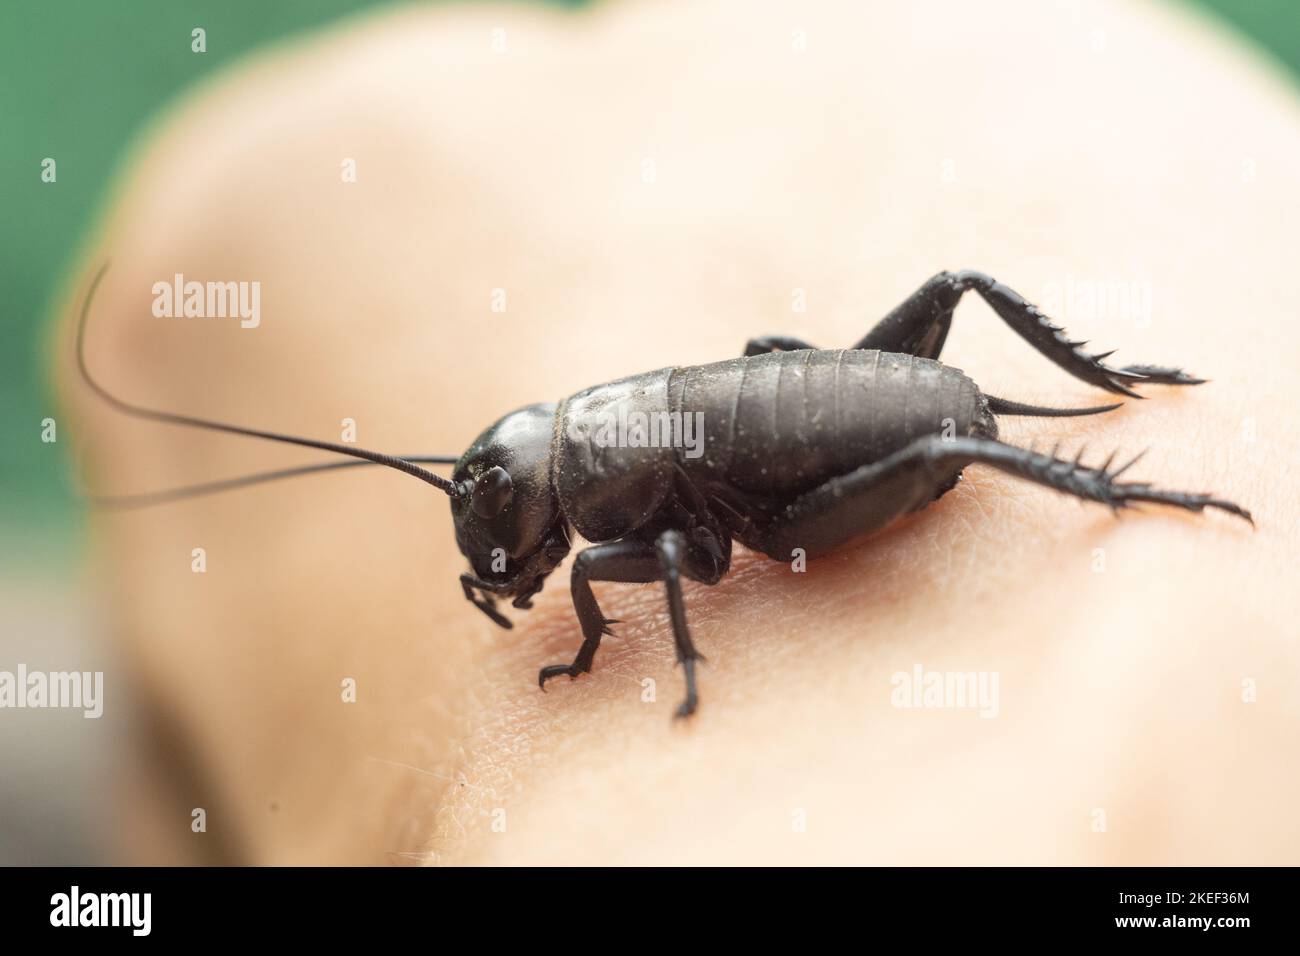 Insect shot close-up. Macro photo of a cricket. Stock Photo